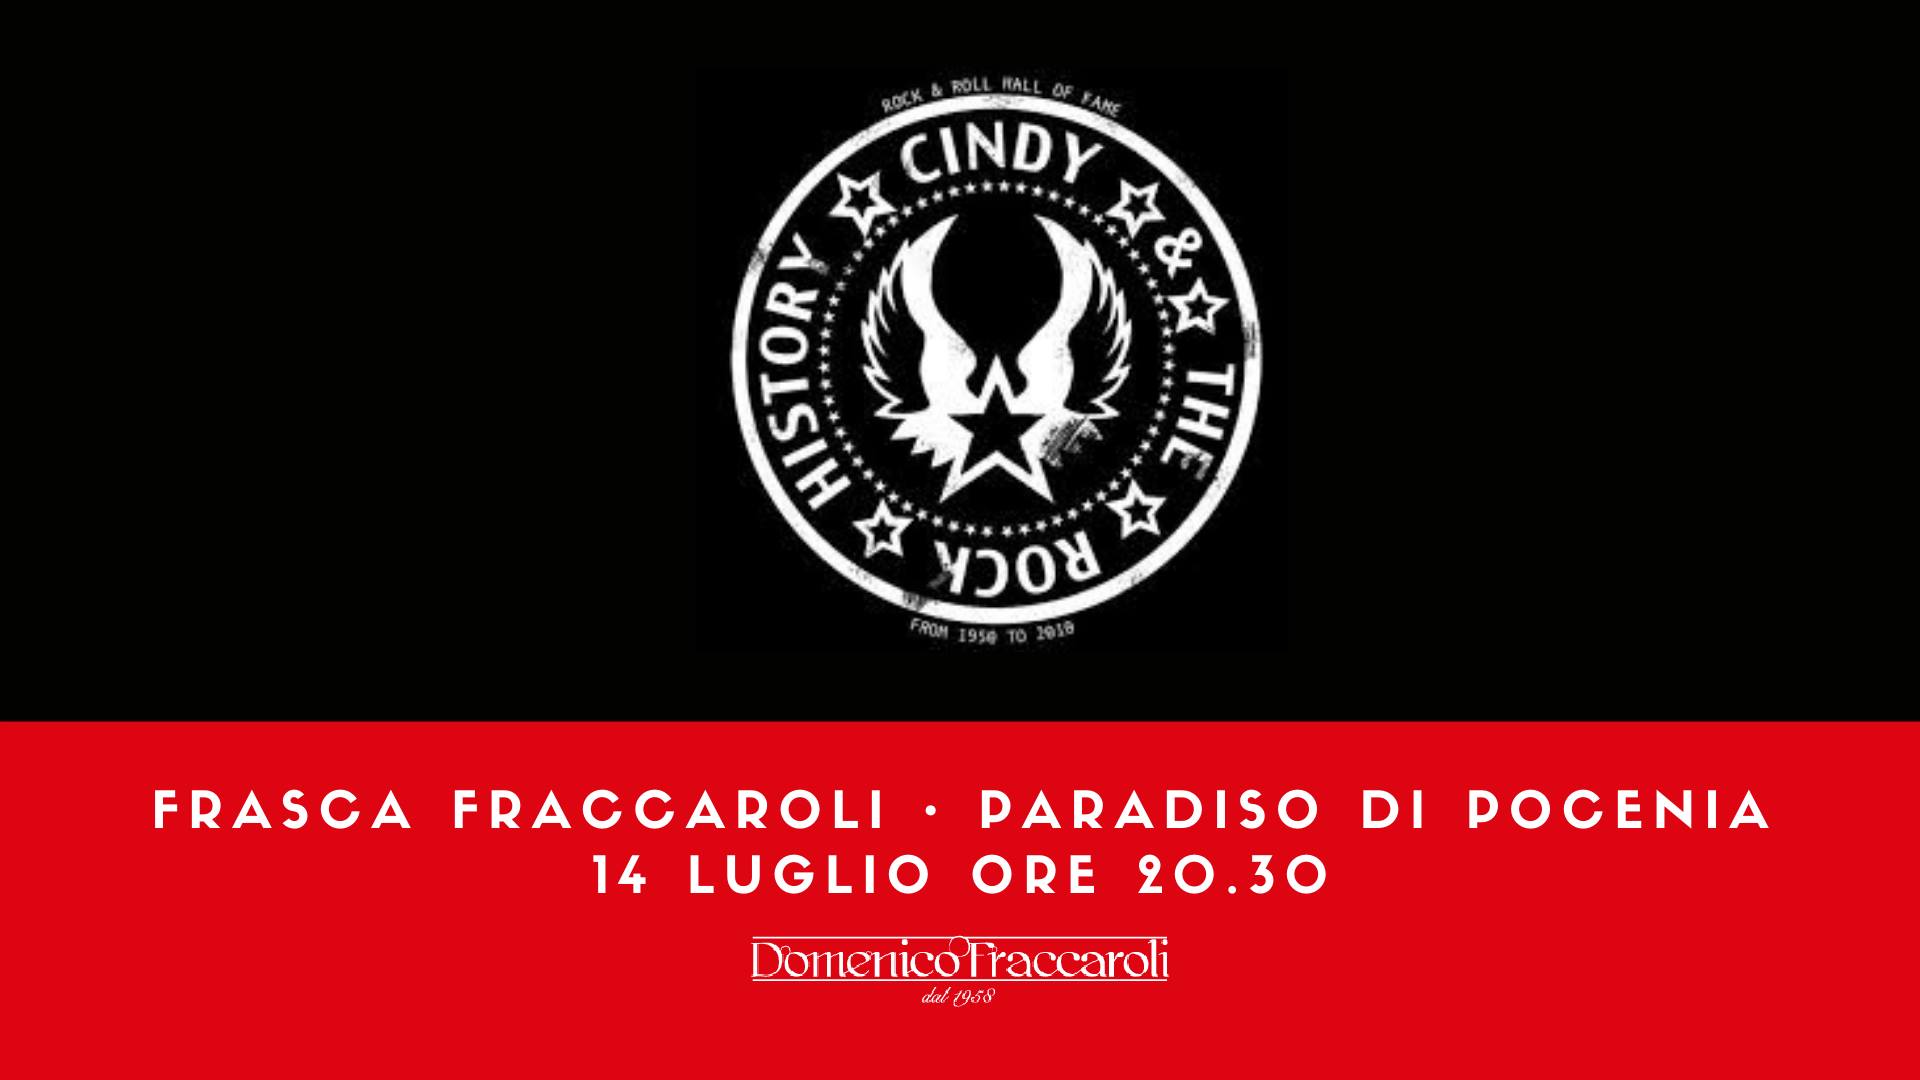 Cindy & The Rock History Live in Frasca Fraccaroli - EventiFVG.it